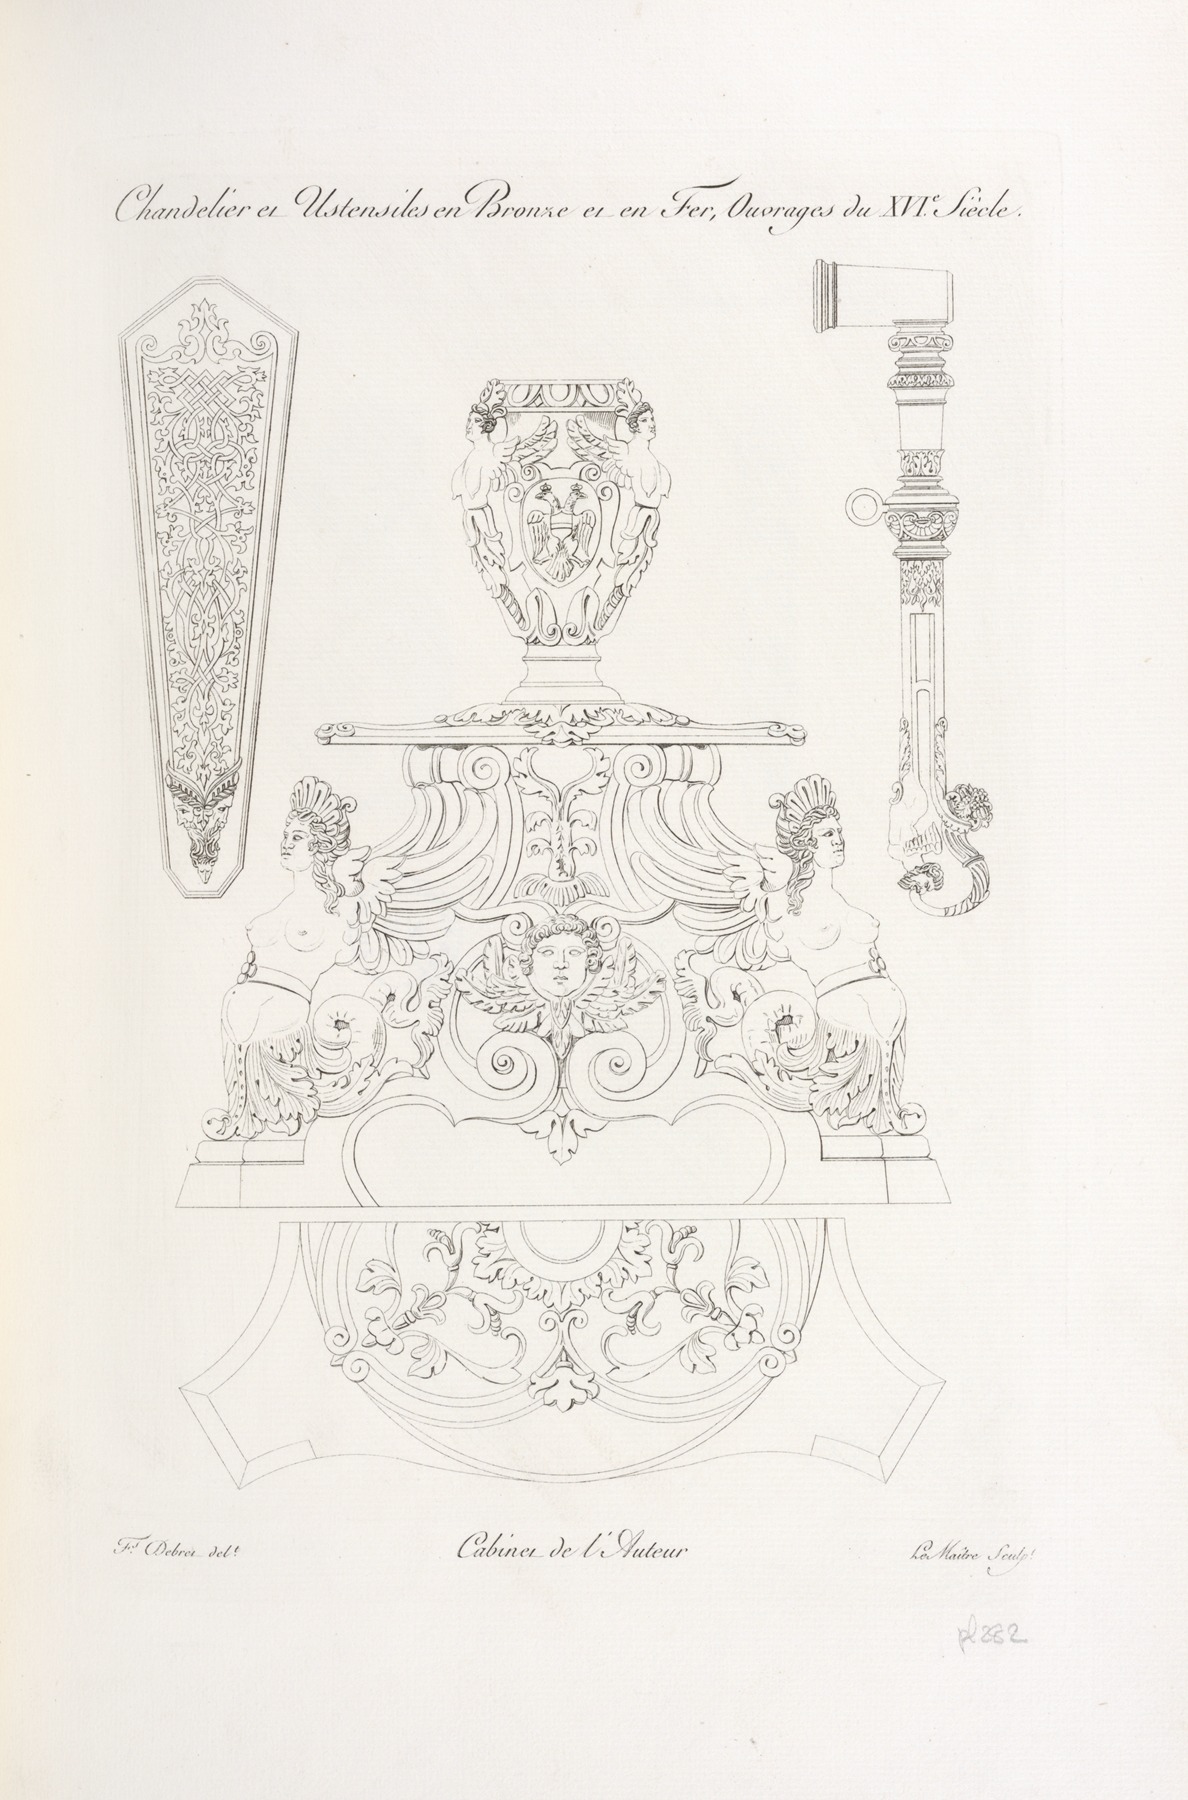 Nicolas Xavier Willemin - Chandelier et ustensiles en bronze et en fer, ouvrages du XVIe. siècle.